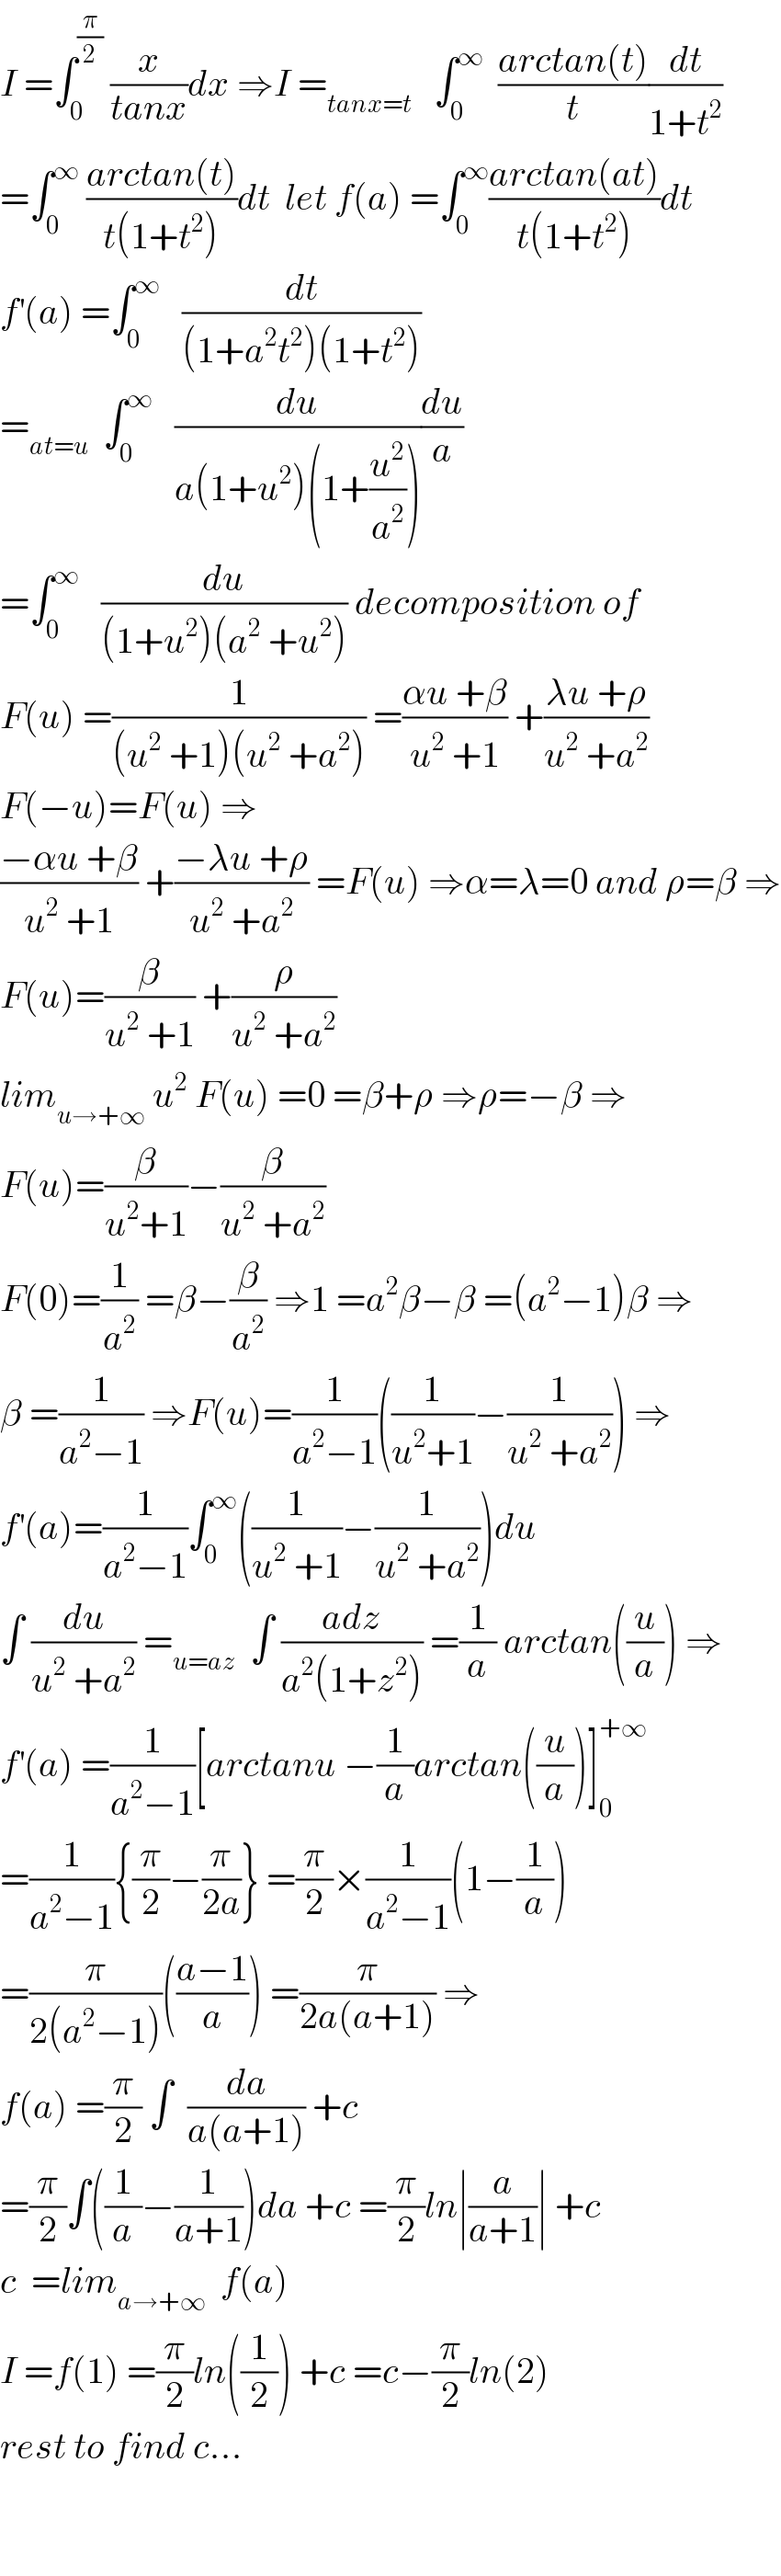 I =∫_0 ^(π/2)  (x/(tanx))dx ⇒I =_(tanx=t)    ∫_0 ^∞   ((arctan(t))/t)(dt/(1+t^2 ))  =∫_0 ^∞  ((arctan(t))/(t(1+t^2 )))dt  let f(a) =∫_0 ^∞ ((arctan(at))/(t(1+t^2 )))dt  f^′ (a) =∫_0 ^∞    (dt/((1+a^2 t^2 )(1+t^2 )))  =_(at=u)   ∫_0 ^∞    (du/(a(1+u^2 )(1+(u^2 /a^2 ))))(du/a)  =∫_0 ^∞    (du/((1+u^2 )(a^2  +u^2 ))) decomposition of  F(u) =(1/((u^2  +1)(u^2  +a^2 ))) =((αu +β)/(u^2  +1)) +((λu +ρ)/(u^2  +a^2 ))  F(−u)=F(u) ⇒  ((−αu +β)/(u^2  +1)) +((−λu +ρ)/(u^2  +a^2 )) =F(u) ⇒α=λ=0 and ρ=β ⇒  F(u)=(β/(u^2  +1)) +(ρ/(u^2  +a^2 ))  lim_(u→+∞)  u^2  F(u) =0 =β+ρ ⇒ρ=−β ⇒  F(u)=(β/(u^2 +1))−(β/(u^2  +a^2 ))  F(0)=(1/a^2 ) =β−(β/a^2 ) ⇒1 =a^2 β−β =(a^2 −1)β ⇒  β =(1/(a^2 −1)) ⇒F(u)=(1/(a^2 −1))((1/(u^2 +1))−(1/(u^2  +a^2 ))) ⇒  f^′ (a)=(1/(a^2 −1))∫_0 ^∞ ((1/(u^2  +1))−(1/(u^2  +a^2 )))du  ∫ (du/(u^2  +a^2 )) =_(u=az)   ∫ ((adz)/(a^2 (1+z^2 ))) =(1/a) arctan((u/a)) ⇒  f^′ (a) =(1/(a^2 −1))[arctanu −(1/a)arctan((u/a))]_0 ^(+∞)   =(1/(a^2 −1)){(π/2)−(π/(2a))} =(π/2)×(1/(a^2 −1))(1−(1/a))  =(π/(2(a^2 −1)))(((a−1)/a)) =(π/(2a(a+1))) ⇒  f(a) =(π/2) ∫  (da/(a(a+1))) +c  =(π/2)∫((1/a)−(1/(a+1)))da +c =(π/2)ln∣(a/(a+1))∣ +c  c  =lim_(a→+∞)   f(a)  I =f(1) =(π/2)ln((1/2)) +c =c−(π/2)ln(2)  rest to find c...      